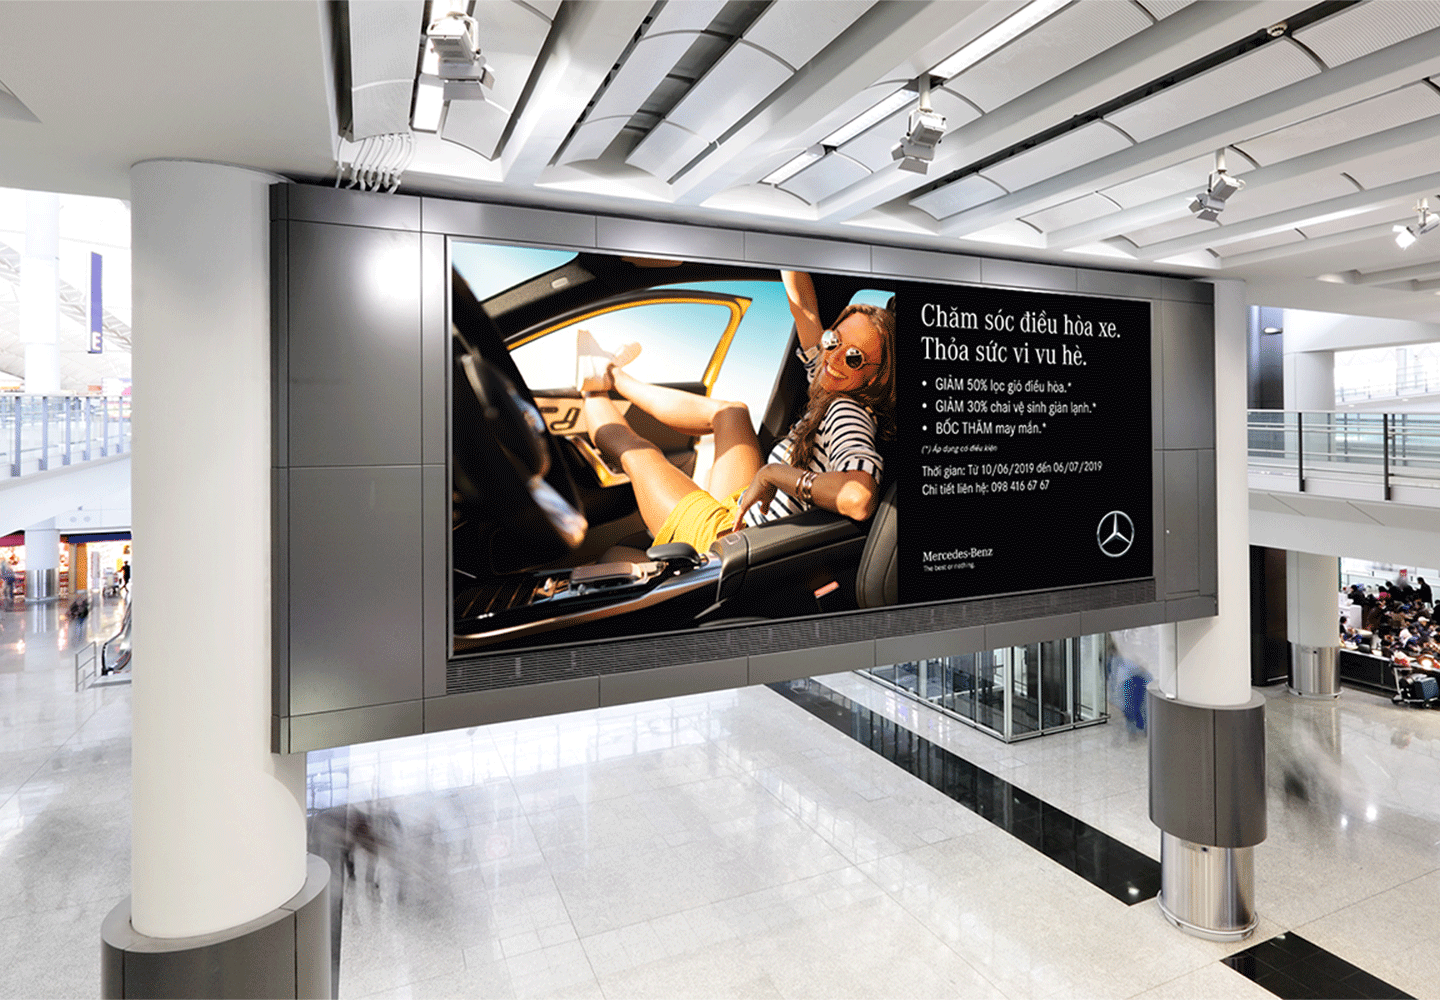 Biển quảng cáo Mercedes